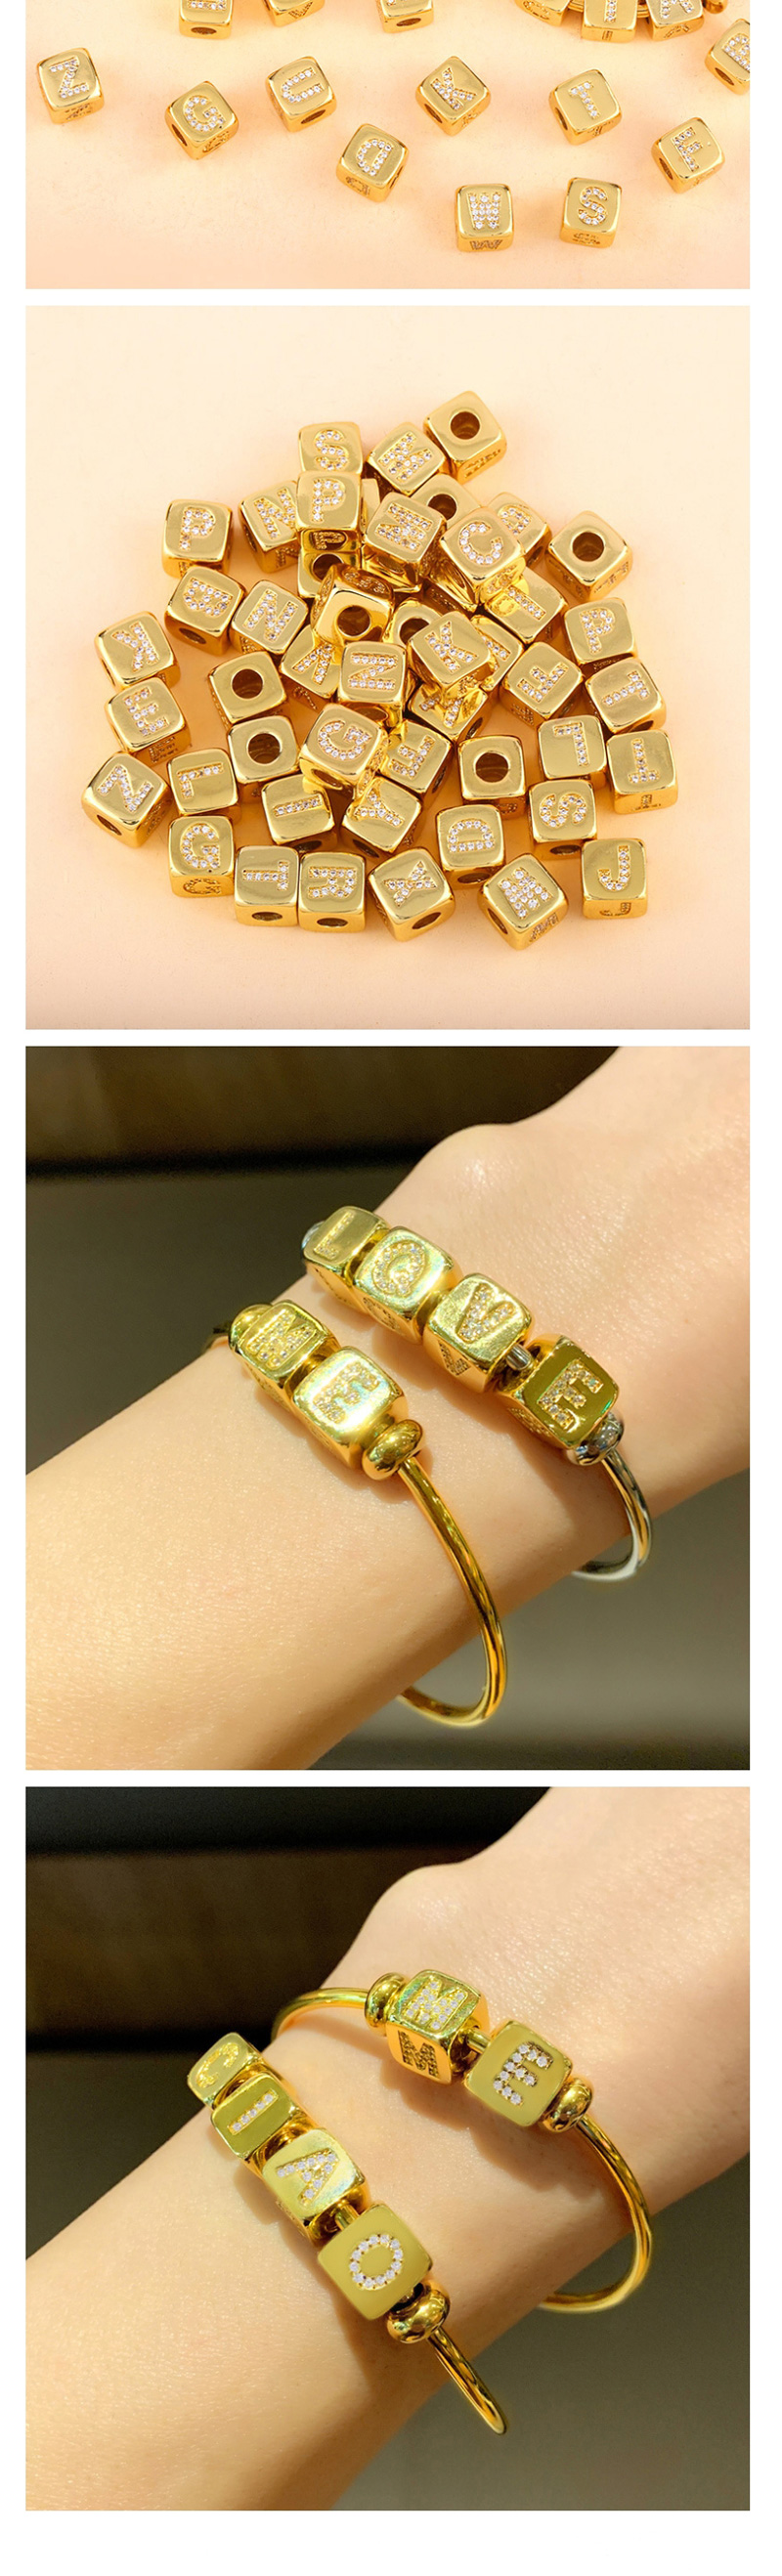 Fashion Golden D Diamond Sieve Diy Bracelet,Jewelry Findings & Components